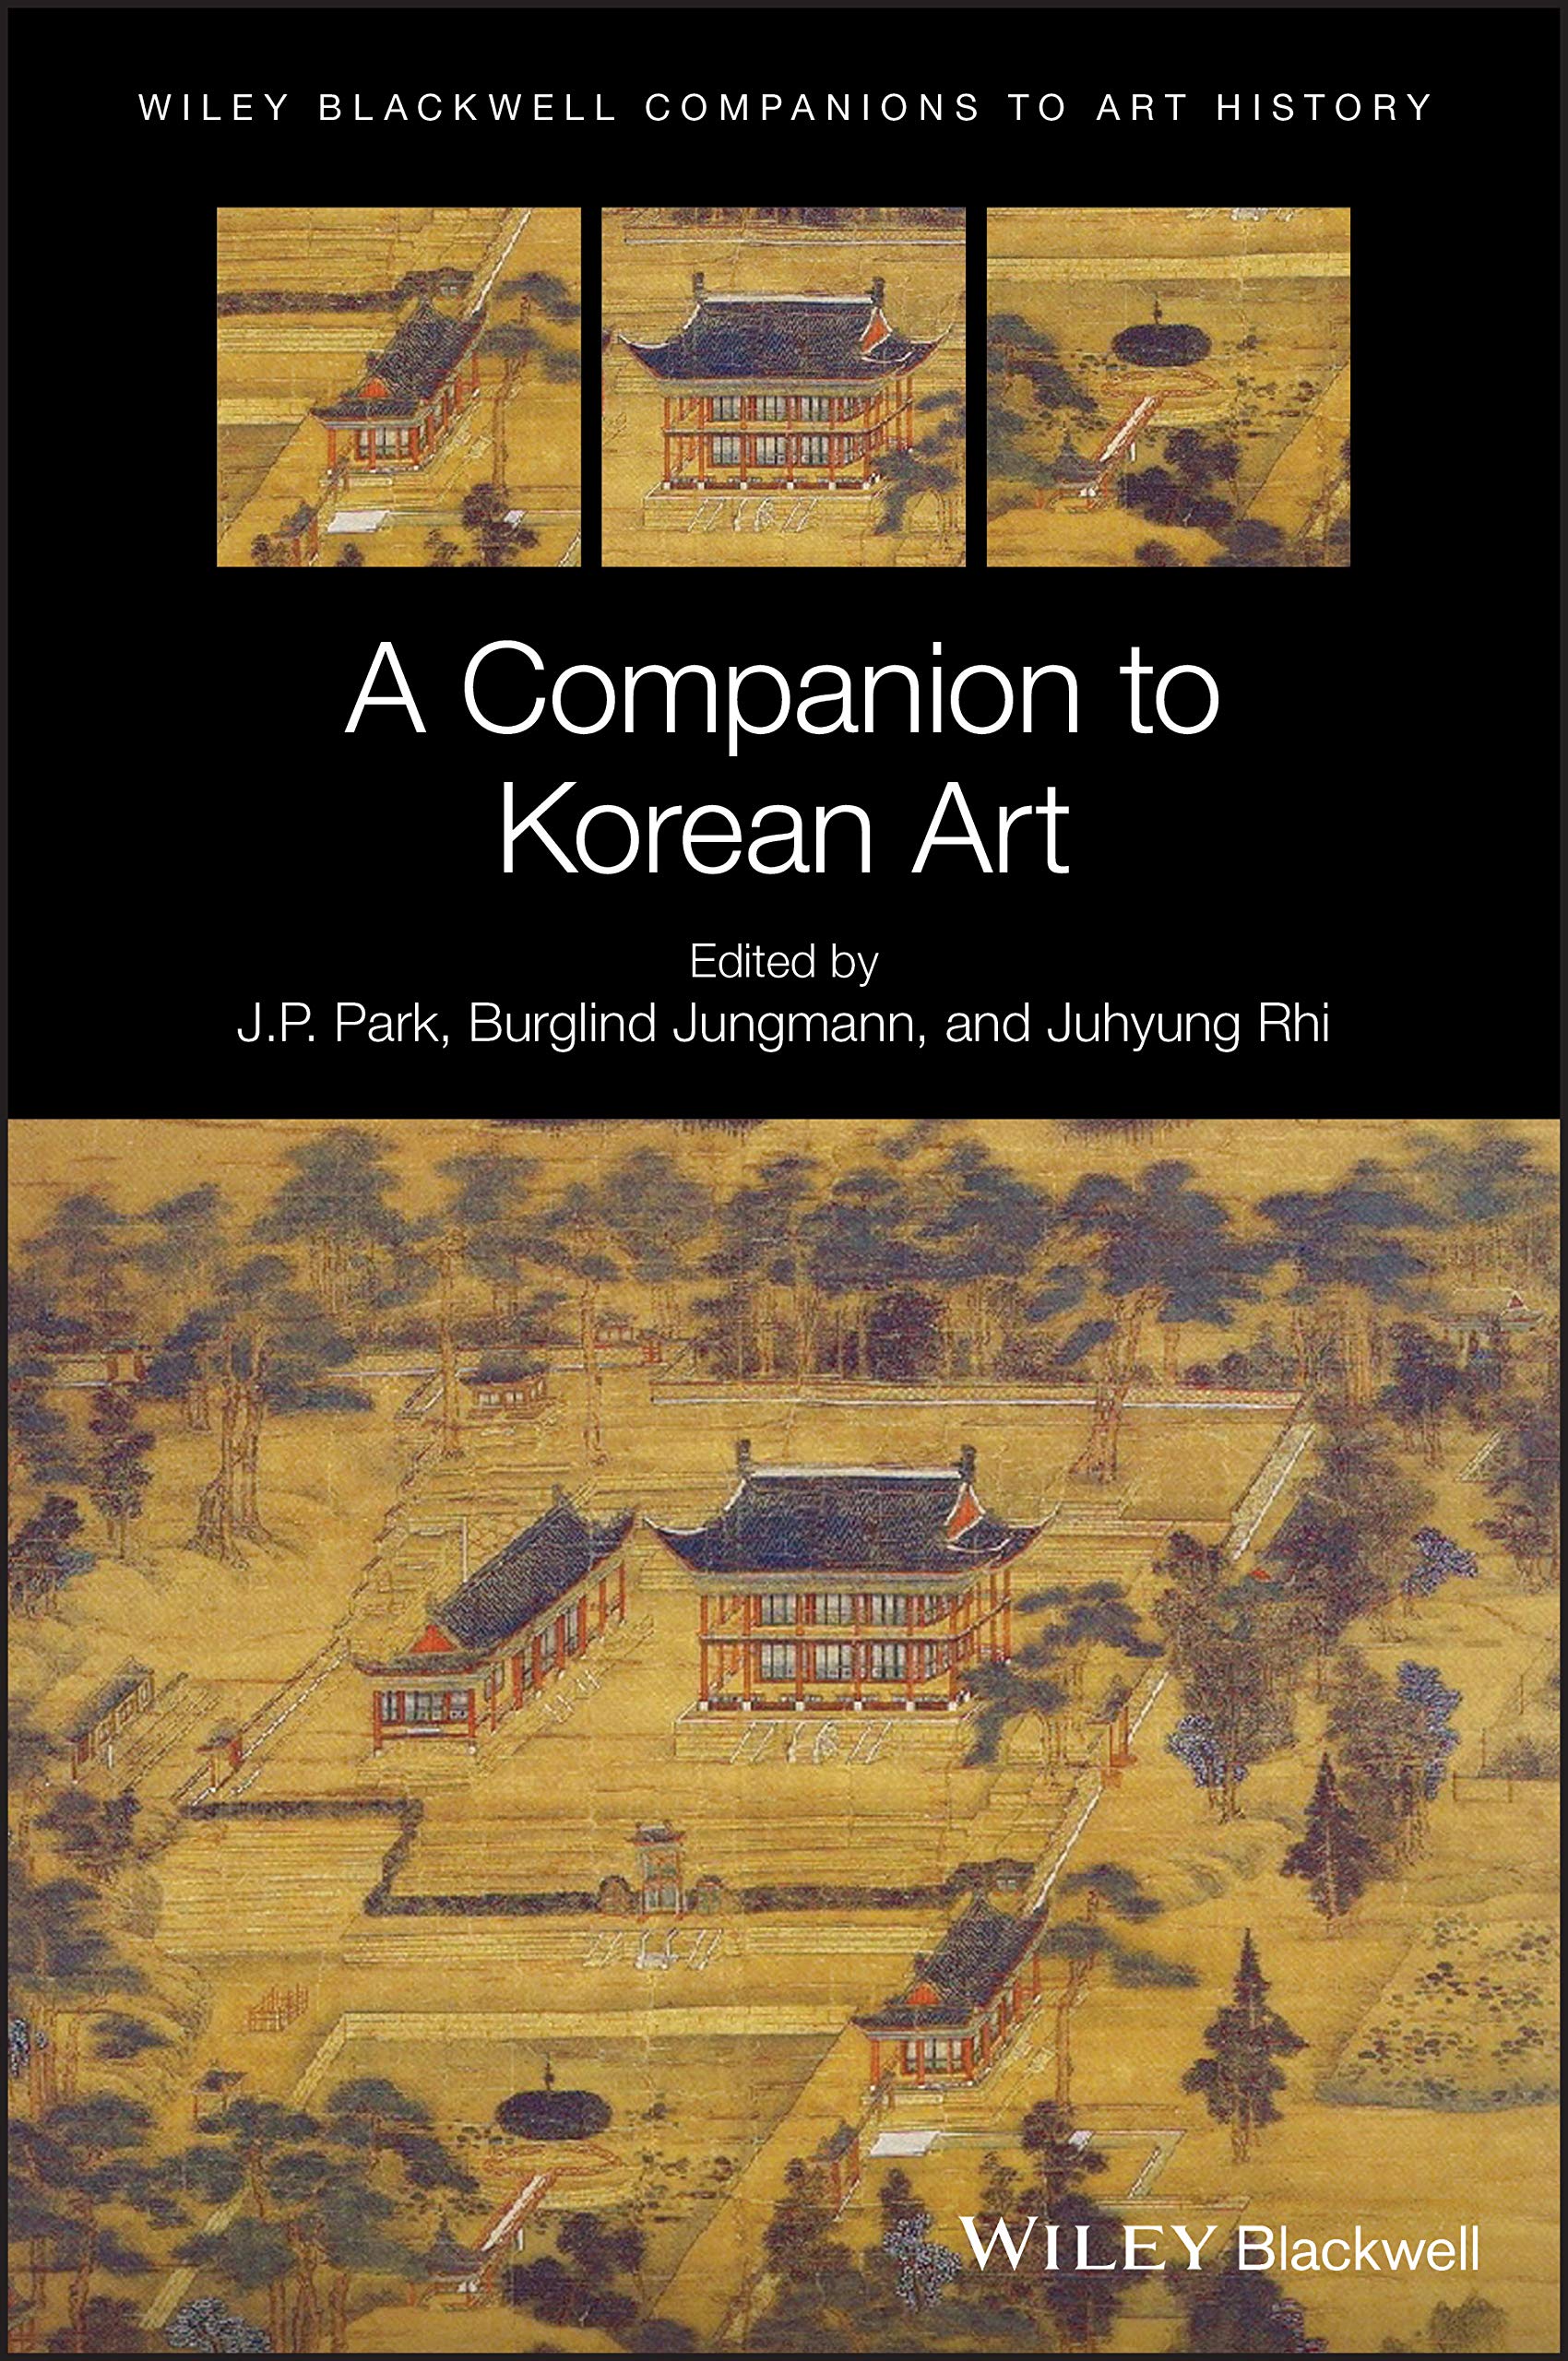 J.P. Park, Burglind Jungmann, and Juhyung Rhi (Editors): A Companion to Korean Art